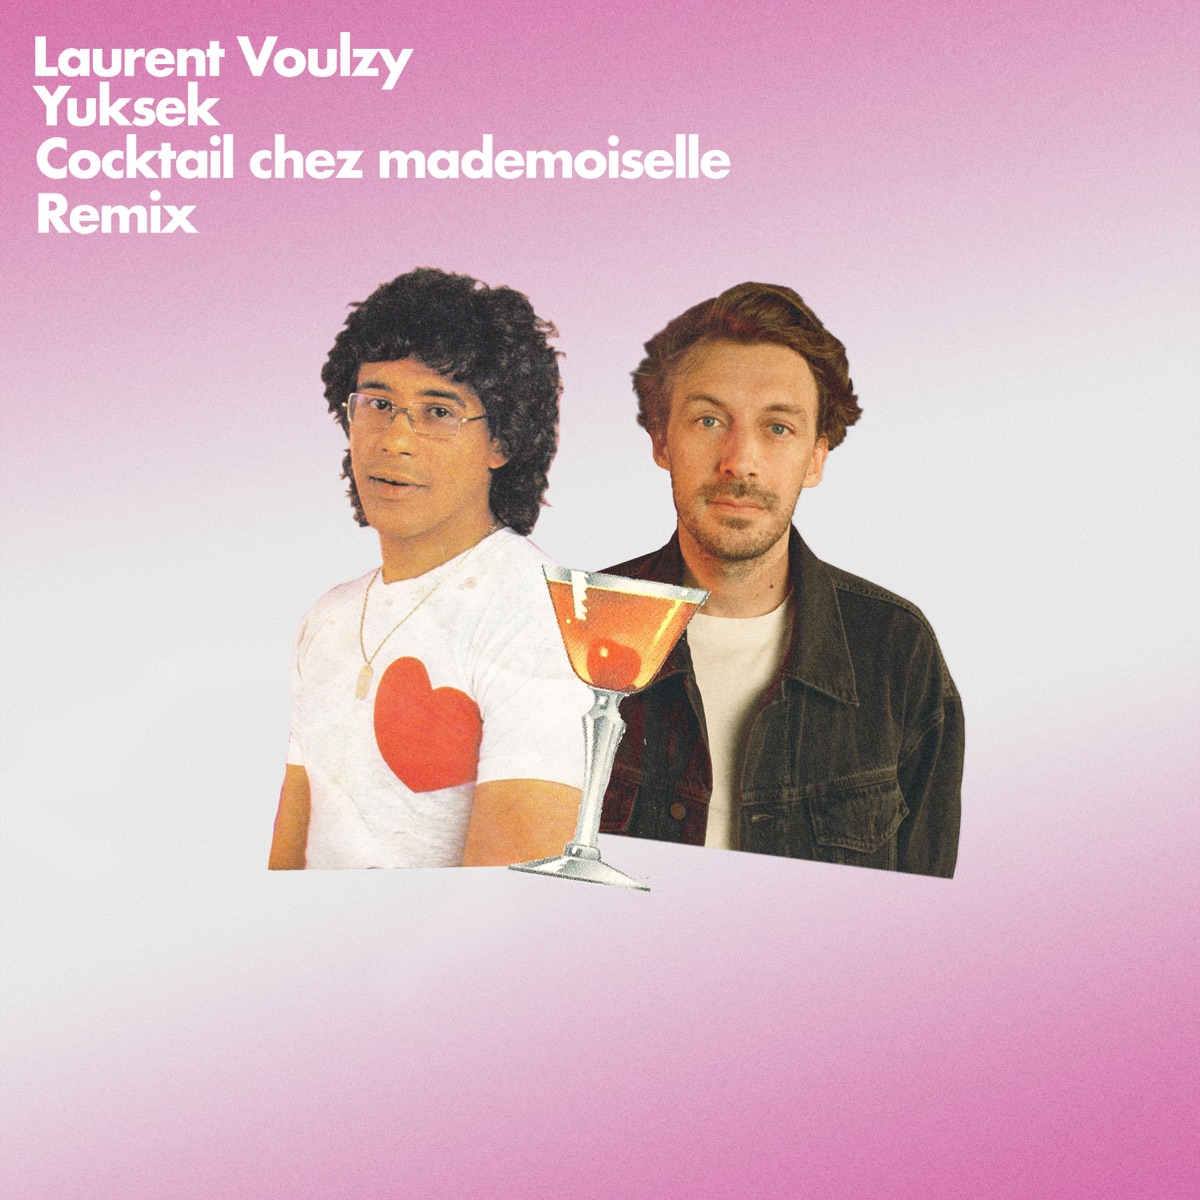 Cocktail chez Mademoiselle : Yuksek remixe Laurent Voulzy - Radio